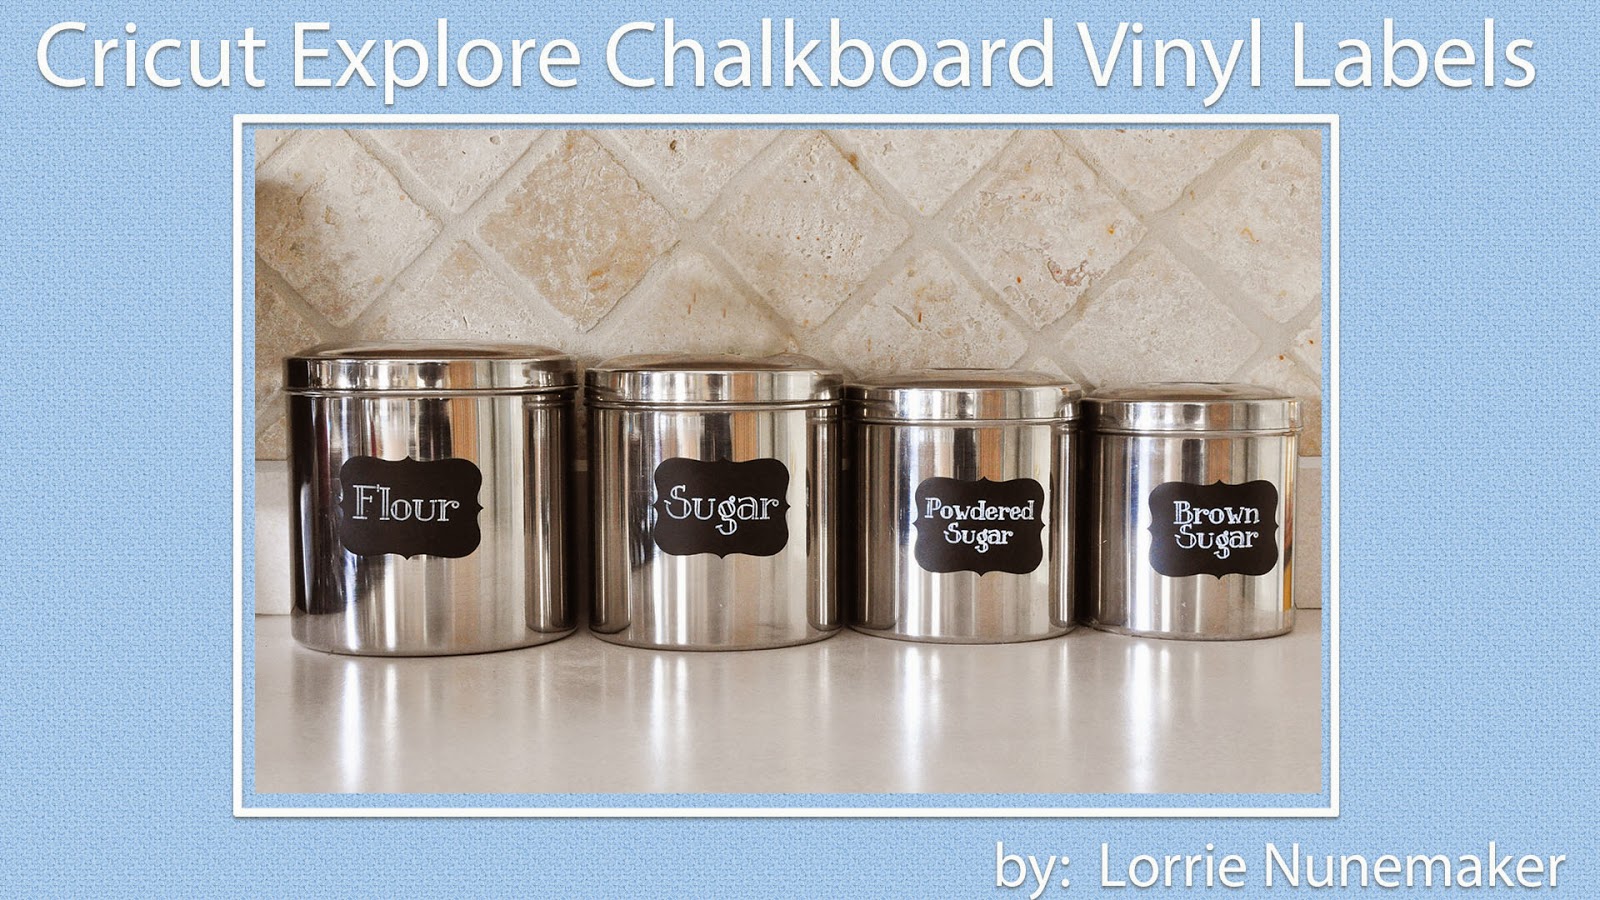 Lorrie's Story: Chalkboard Vinyl Kitchen Labels with the Cricut Explore